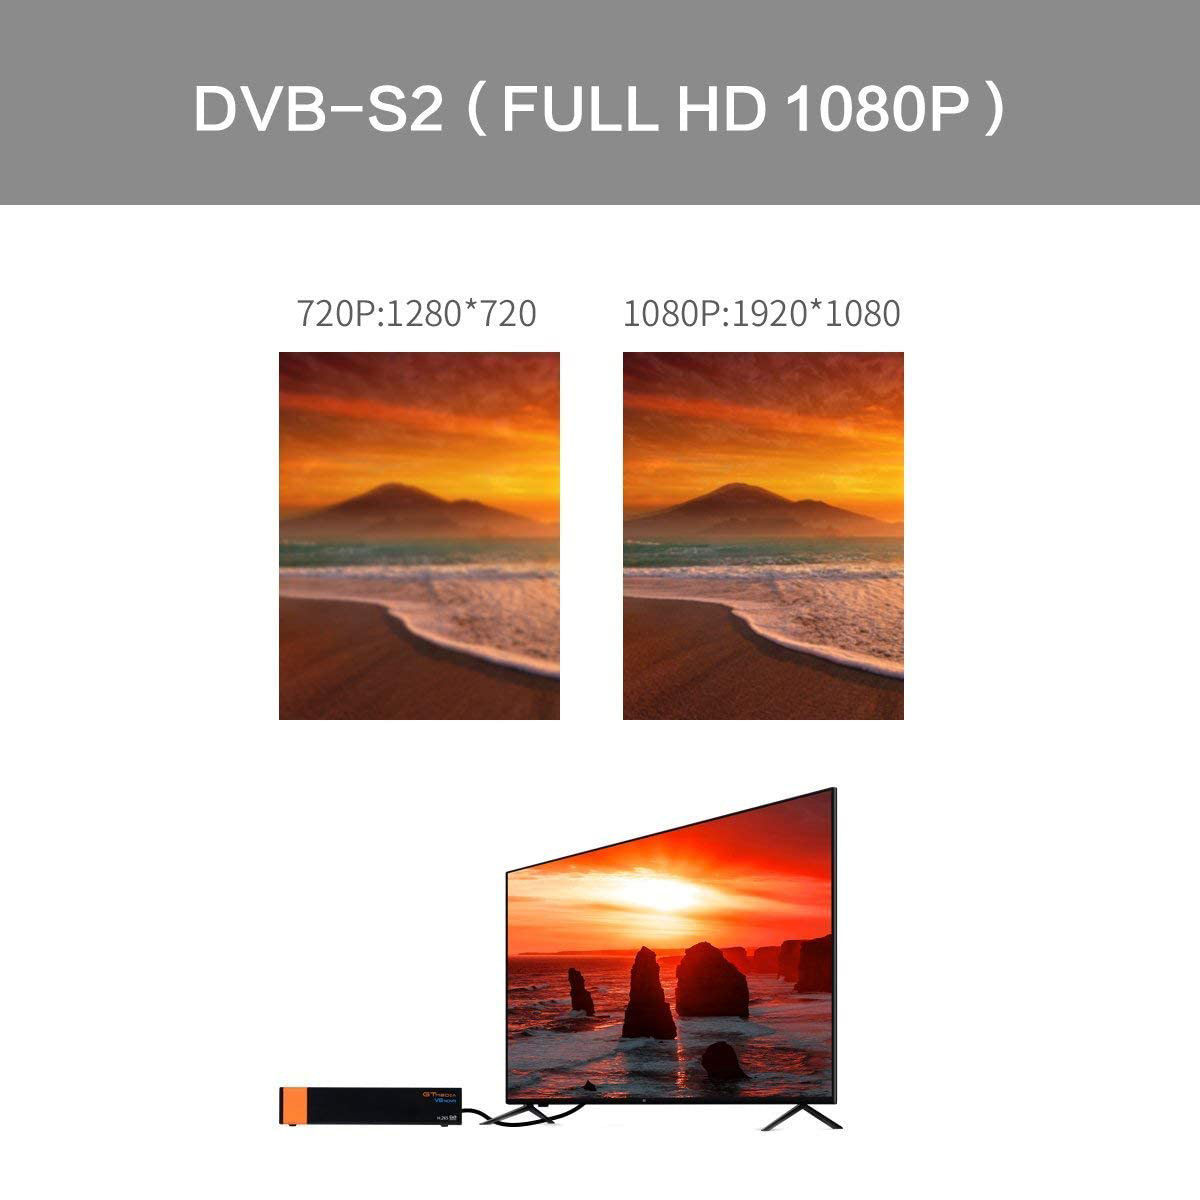 GTmedia-V8-NOVA-DVB-S2-Satellite-1080P-HD-H265-Built-in-WIFI-TV-Signal-Receiver-Support-CCcams-1300046